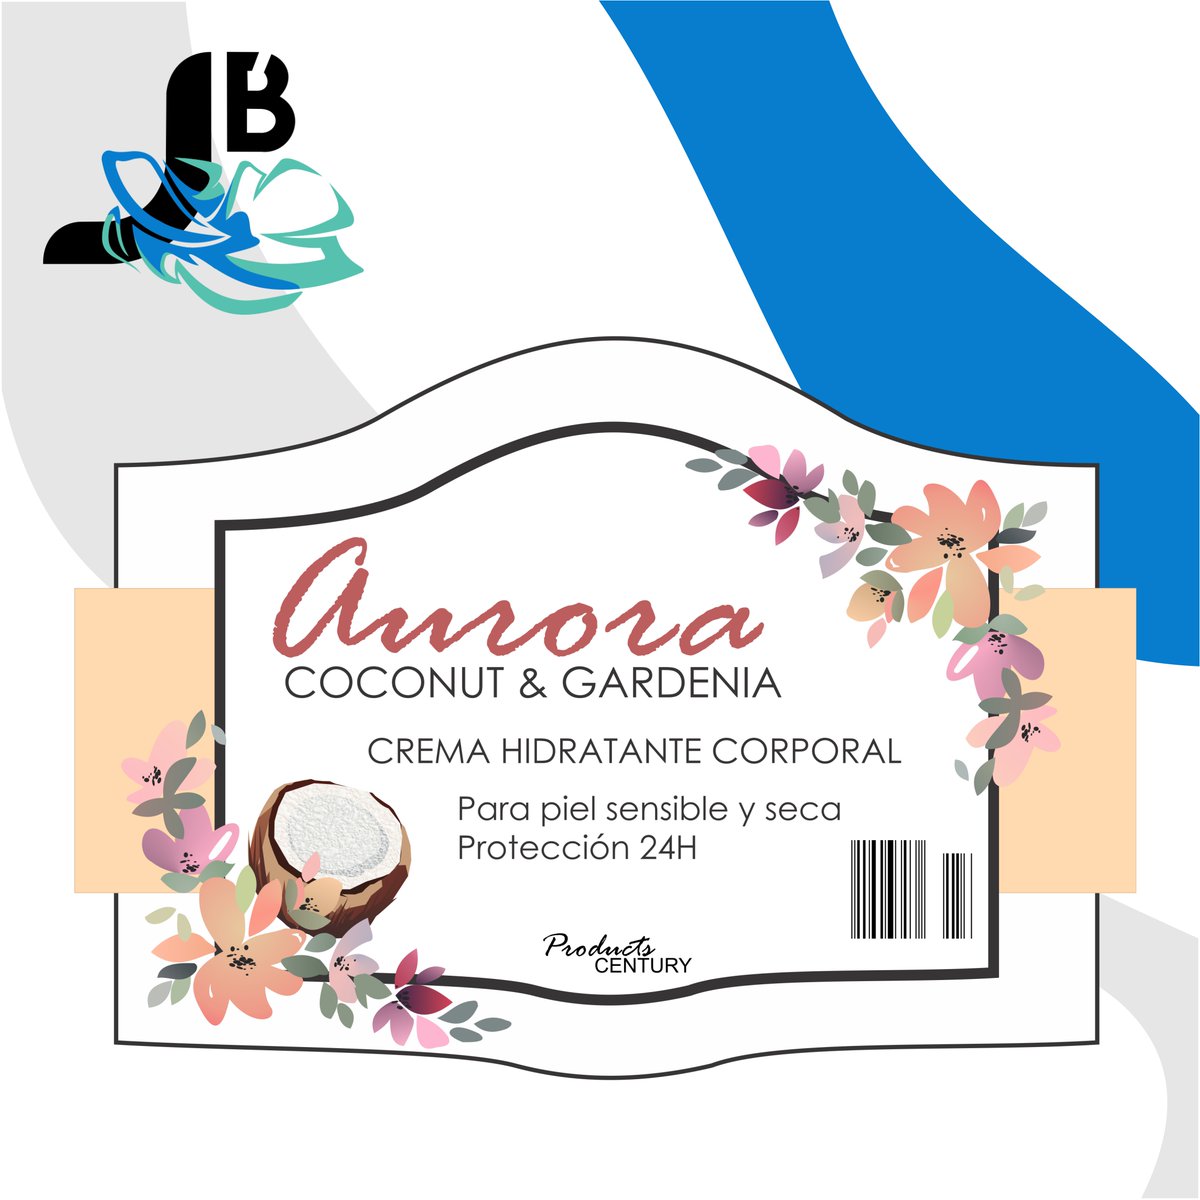 Creta aterrizaje Siete Twitter 上的 JBeta Designer："Etiqueta para la Crema Corporal “Aurora”  @CsocialDgrafico #etiqueta #crema #diseño #diseñografico #aurora #coco  #gardenia https://t.co/1p5w4tJGJF" / Twitter